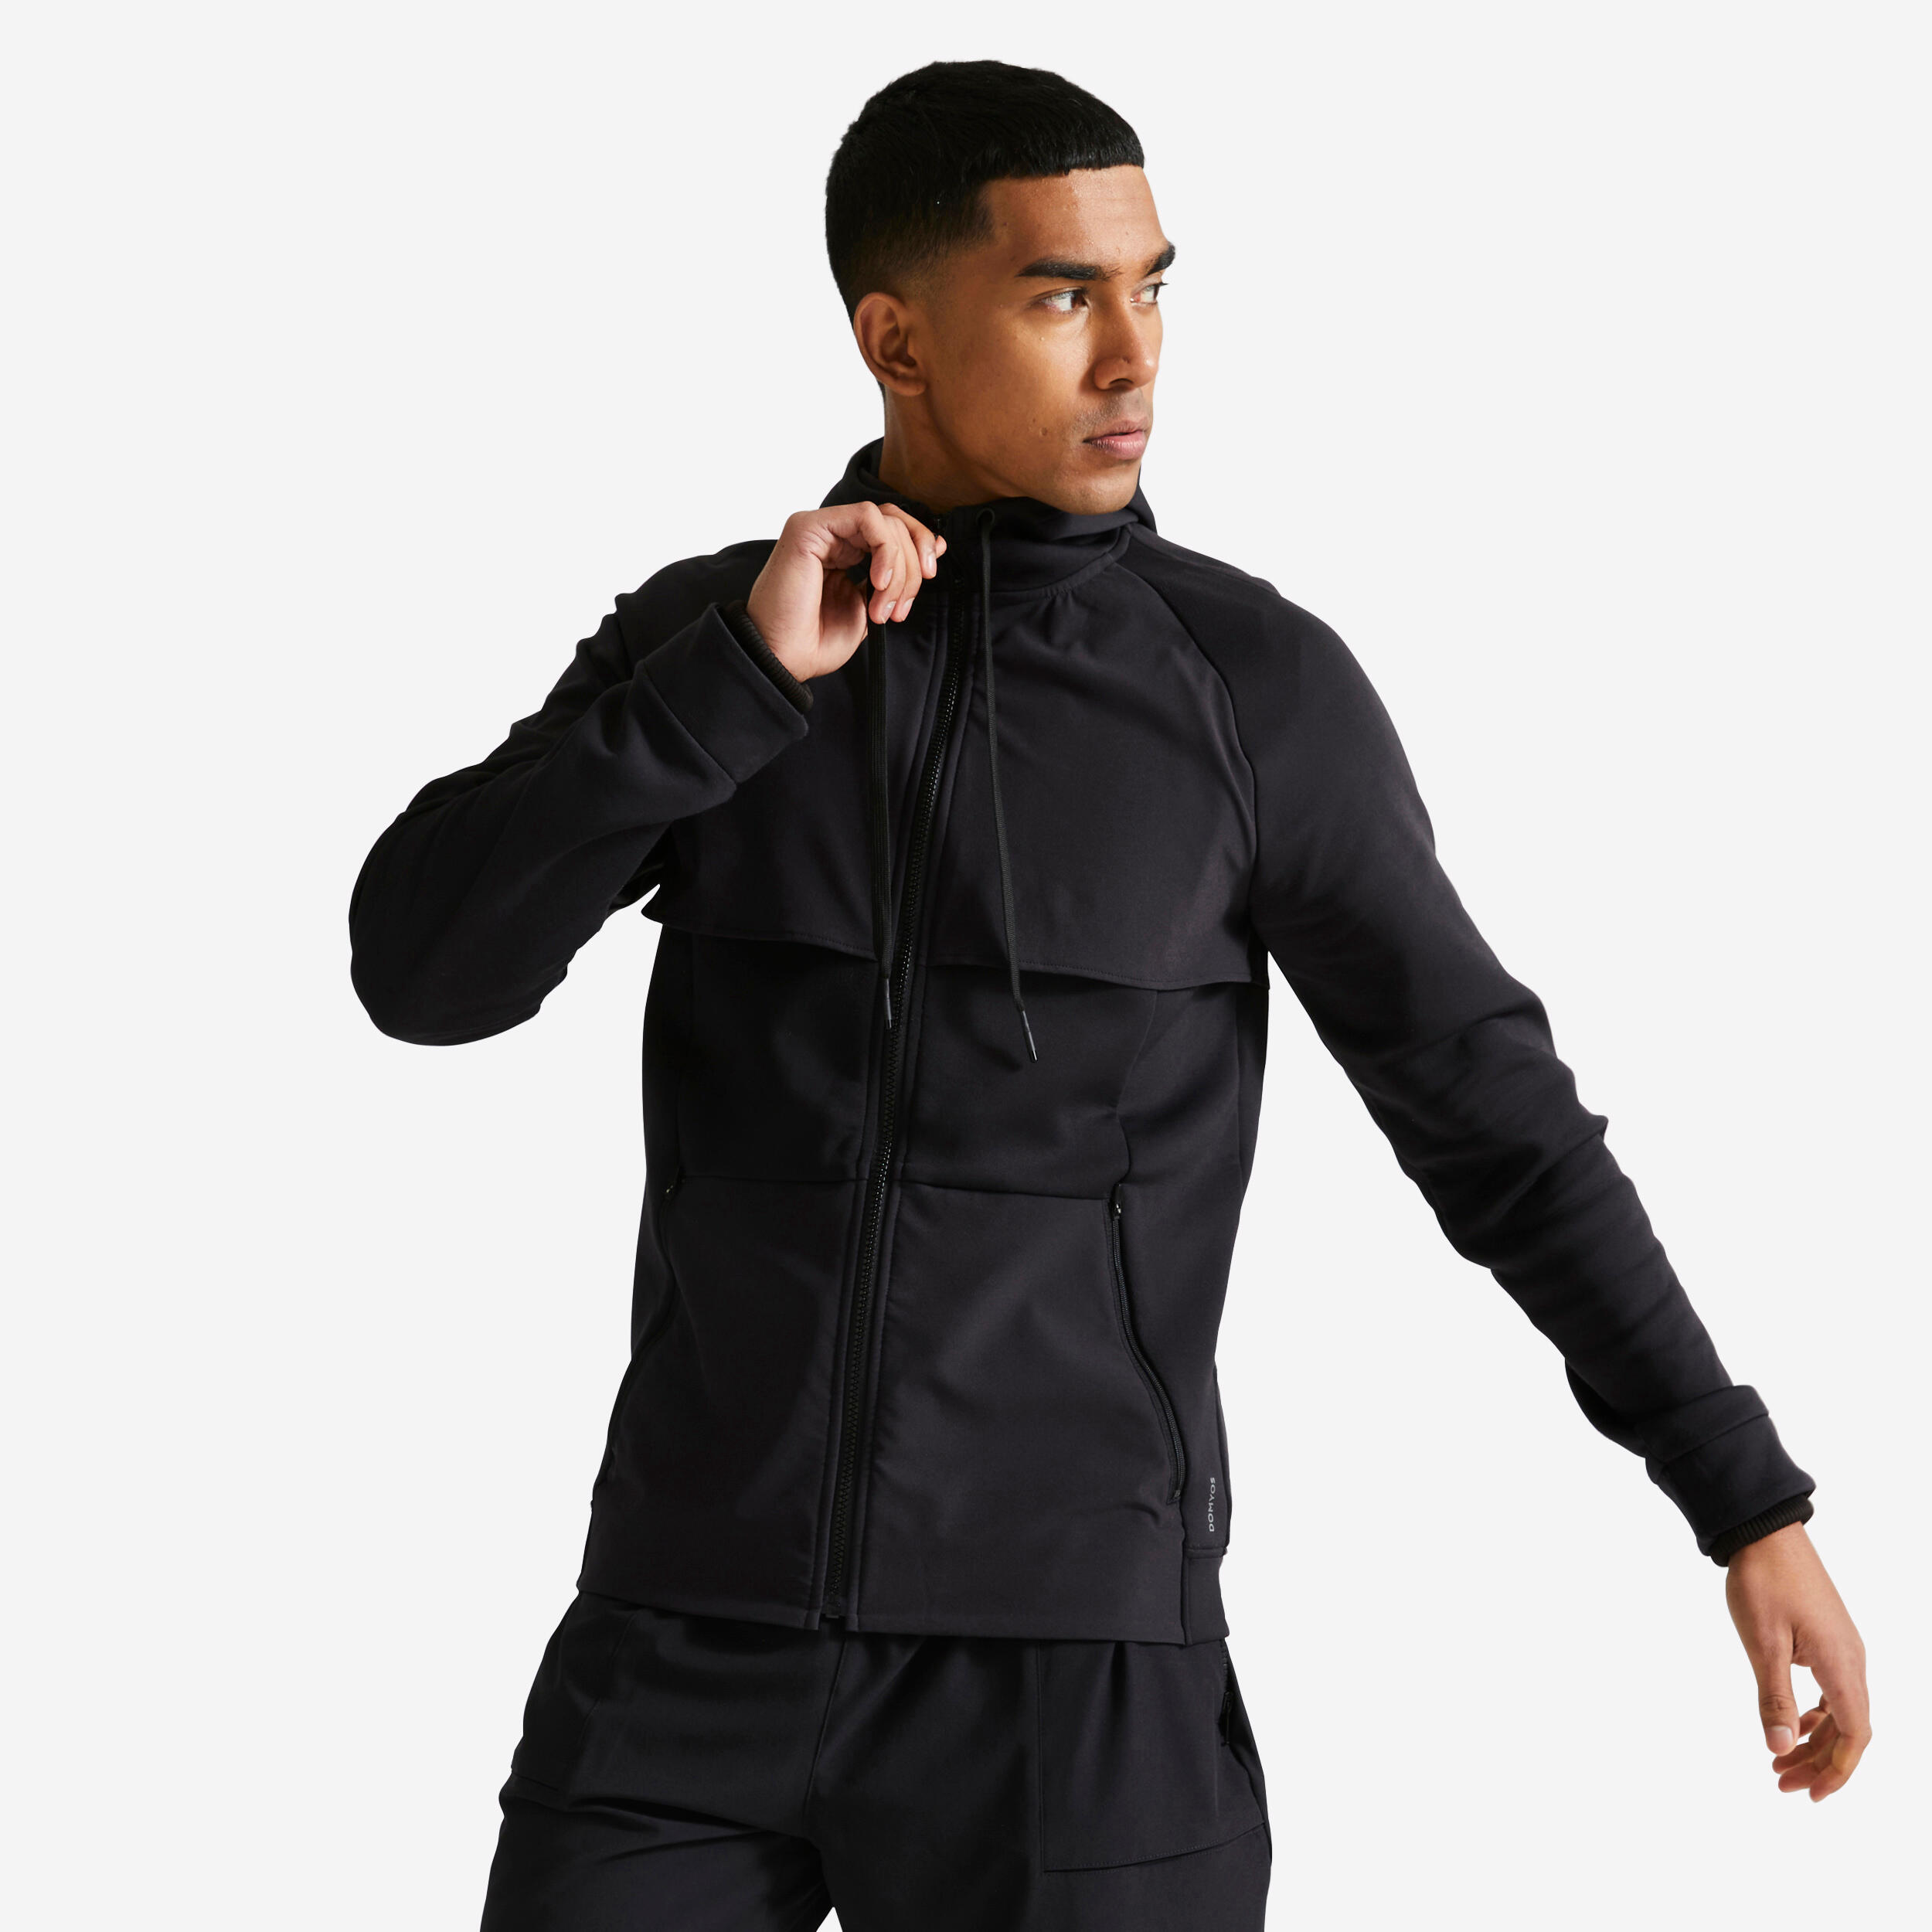 DOMYOS Men's Breathable Zipped Performance Fitness Jacket - Black